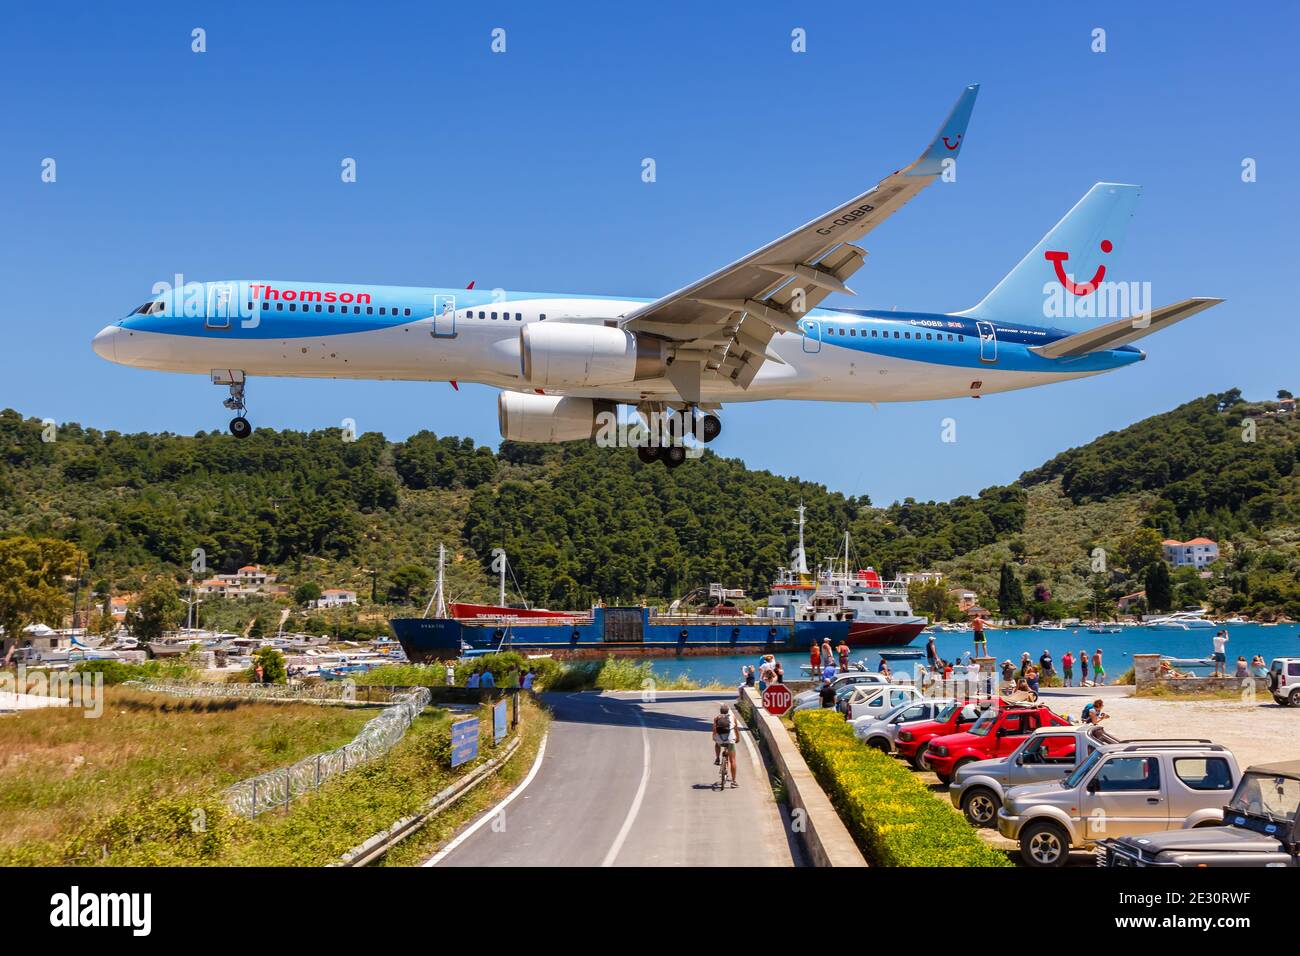 Skiathos, Greece - June 3, 2016: Thomson Airways Boeing 757-200 airplane at Skiathos Airport (JSI) in Greece. Boeing is an American aircraft manufactu Stock Photo